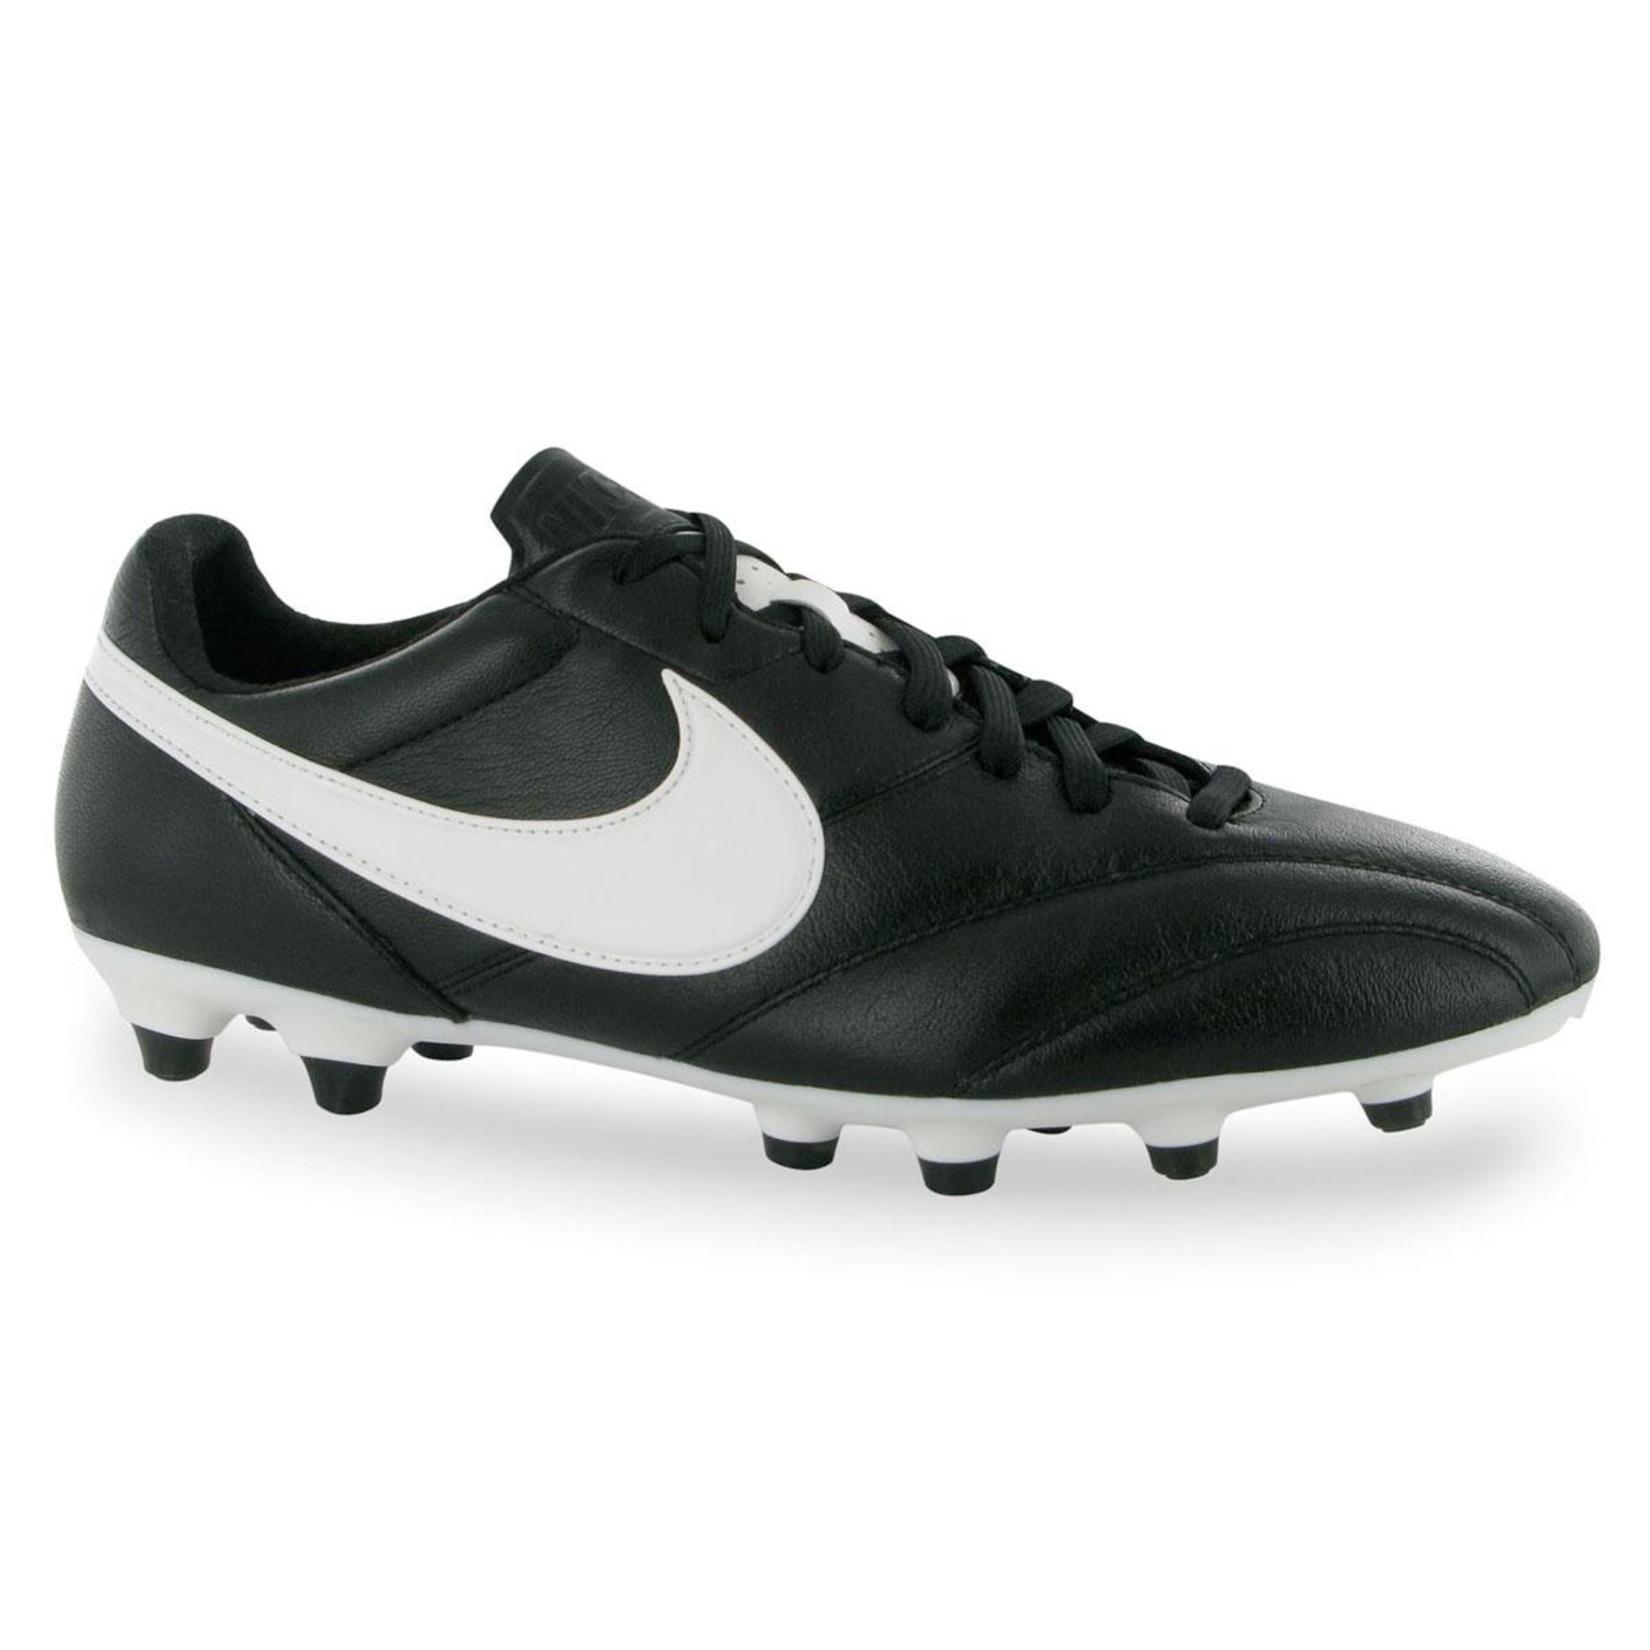 Nike Premier Firm Ground Football Boot - Kitlocker.com